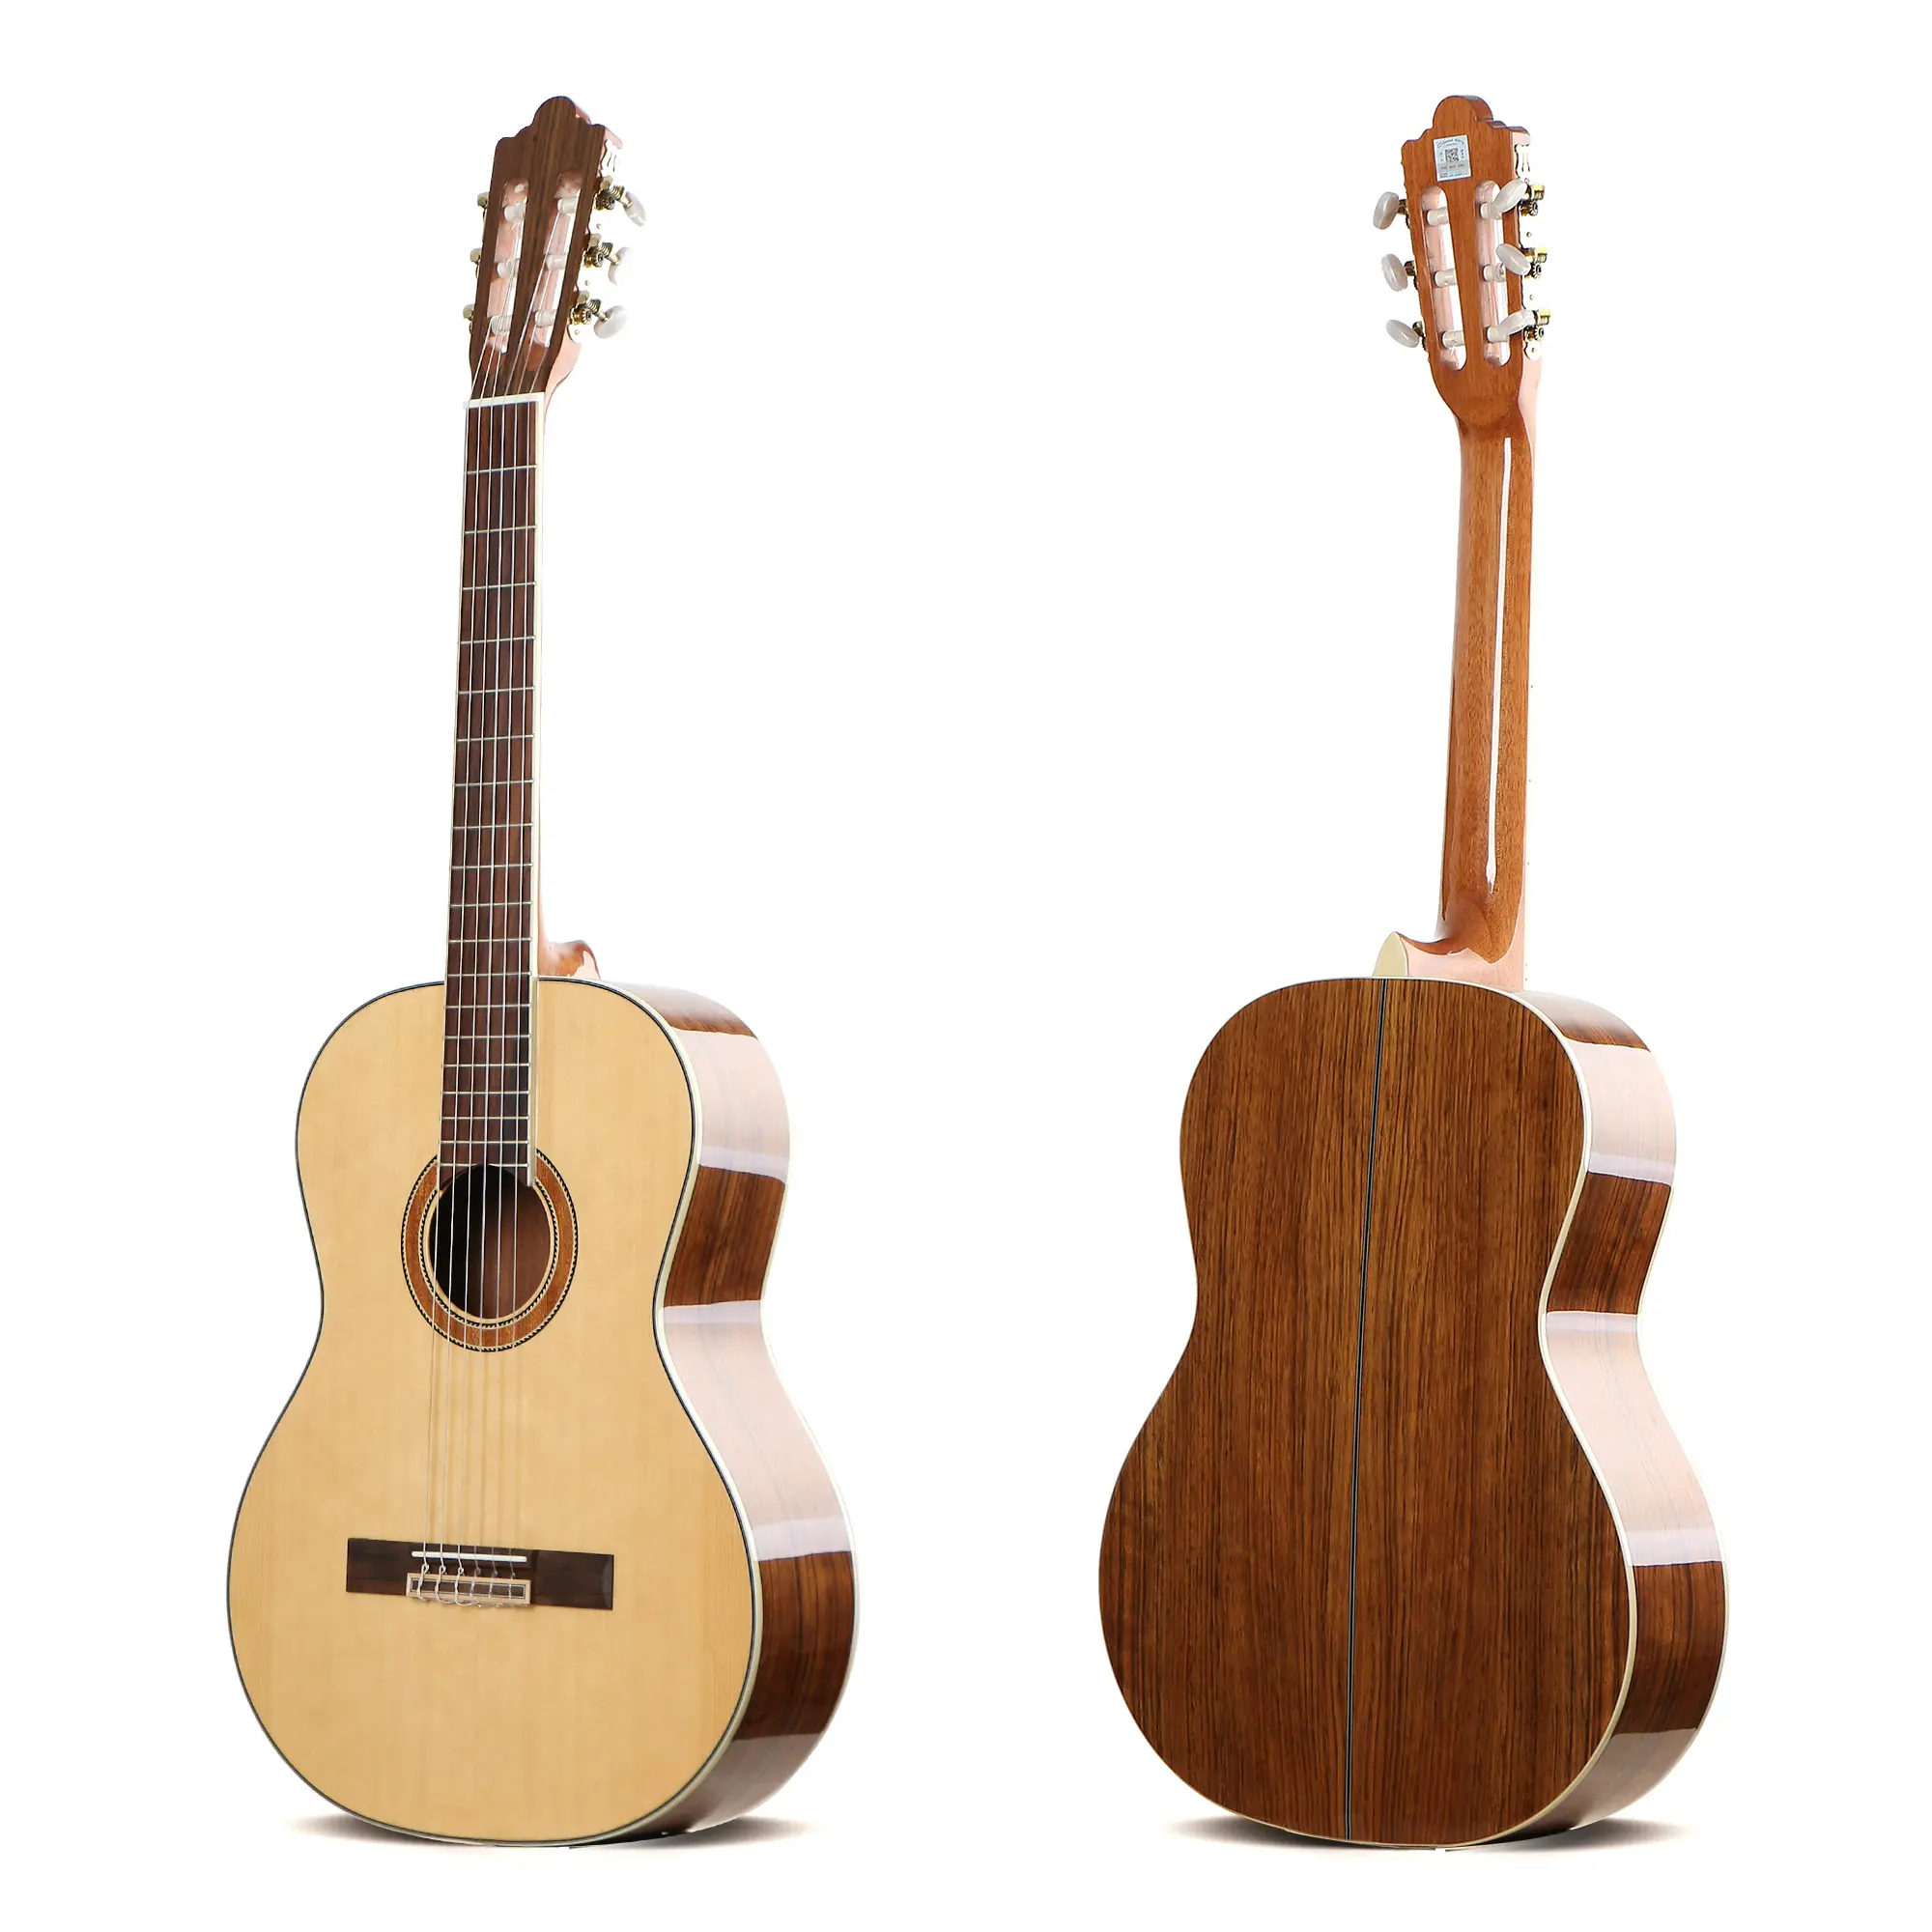 Handmade spruce &walnut nylon strings high quality classical guitar